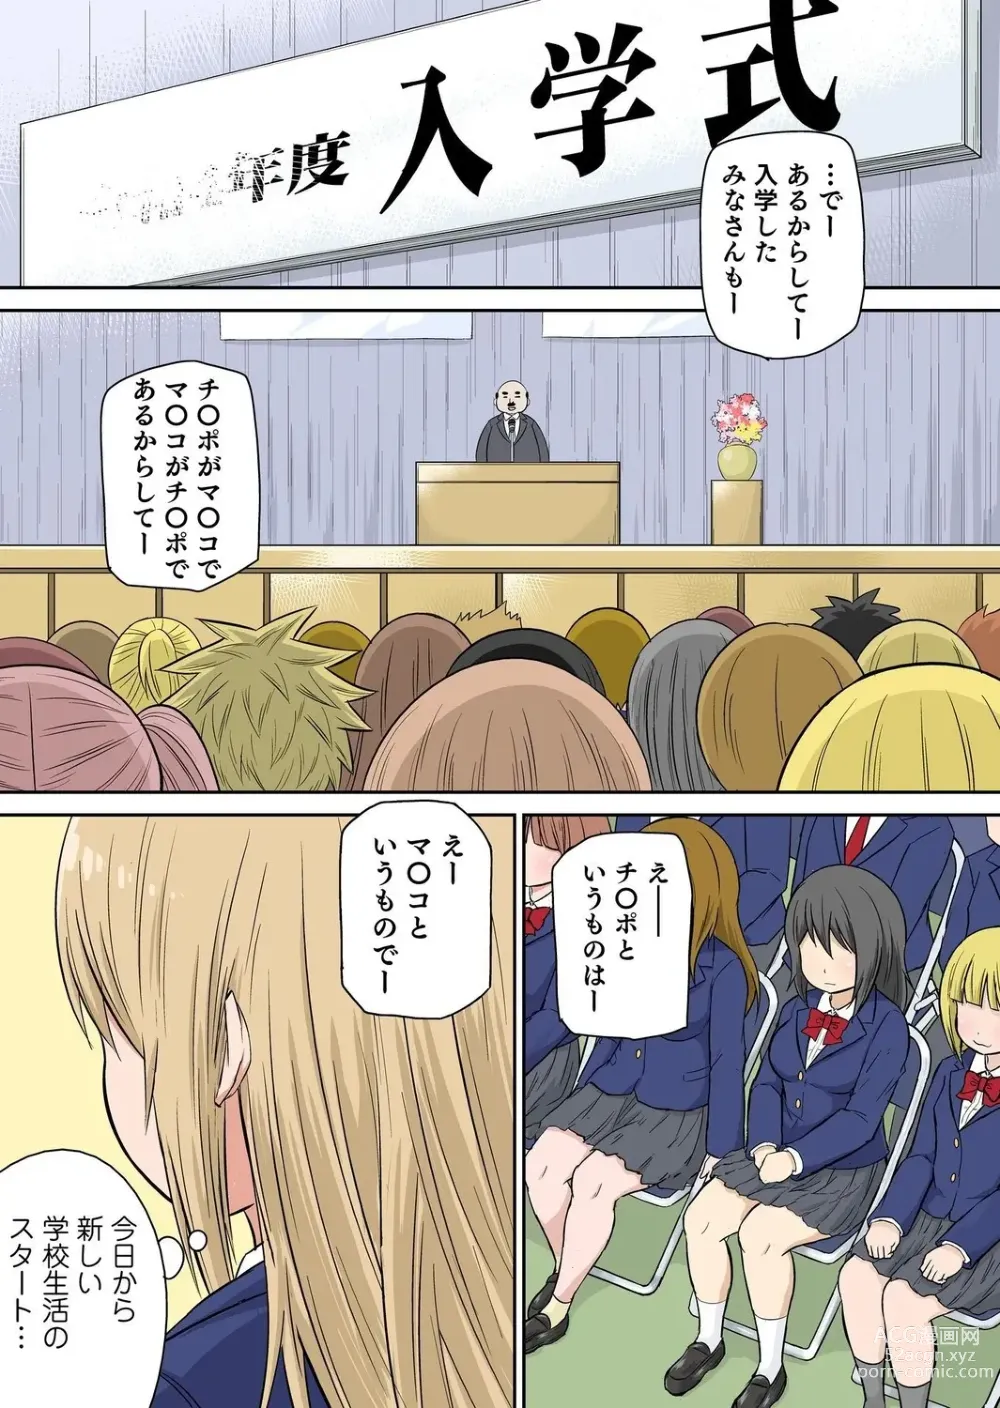 Page 6 of manga Classmate to Ecchi Jugyou Season two Chapter1~Chapter4